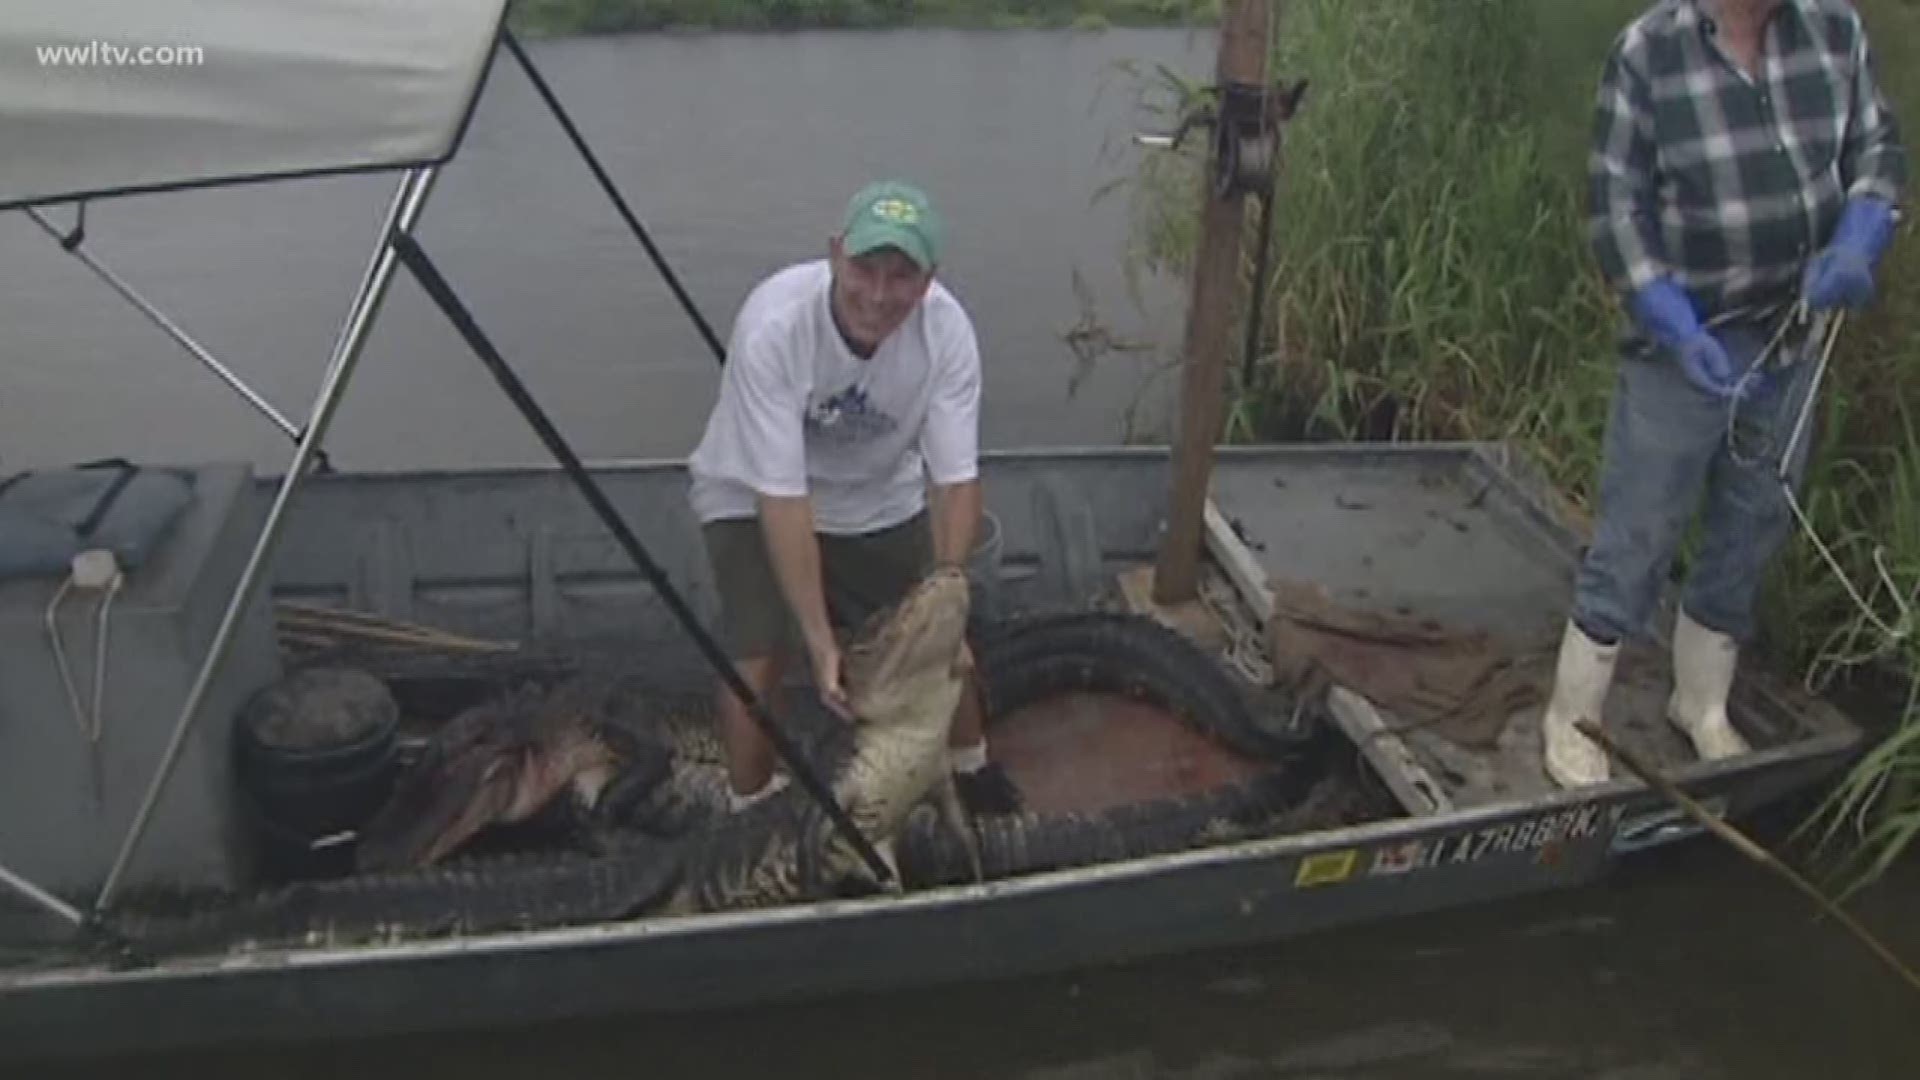 Low prices make for slow alligator season in Louisiana